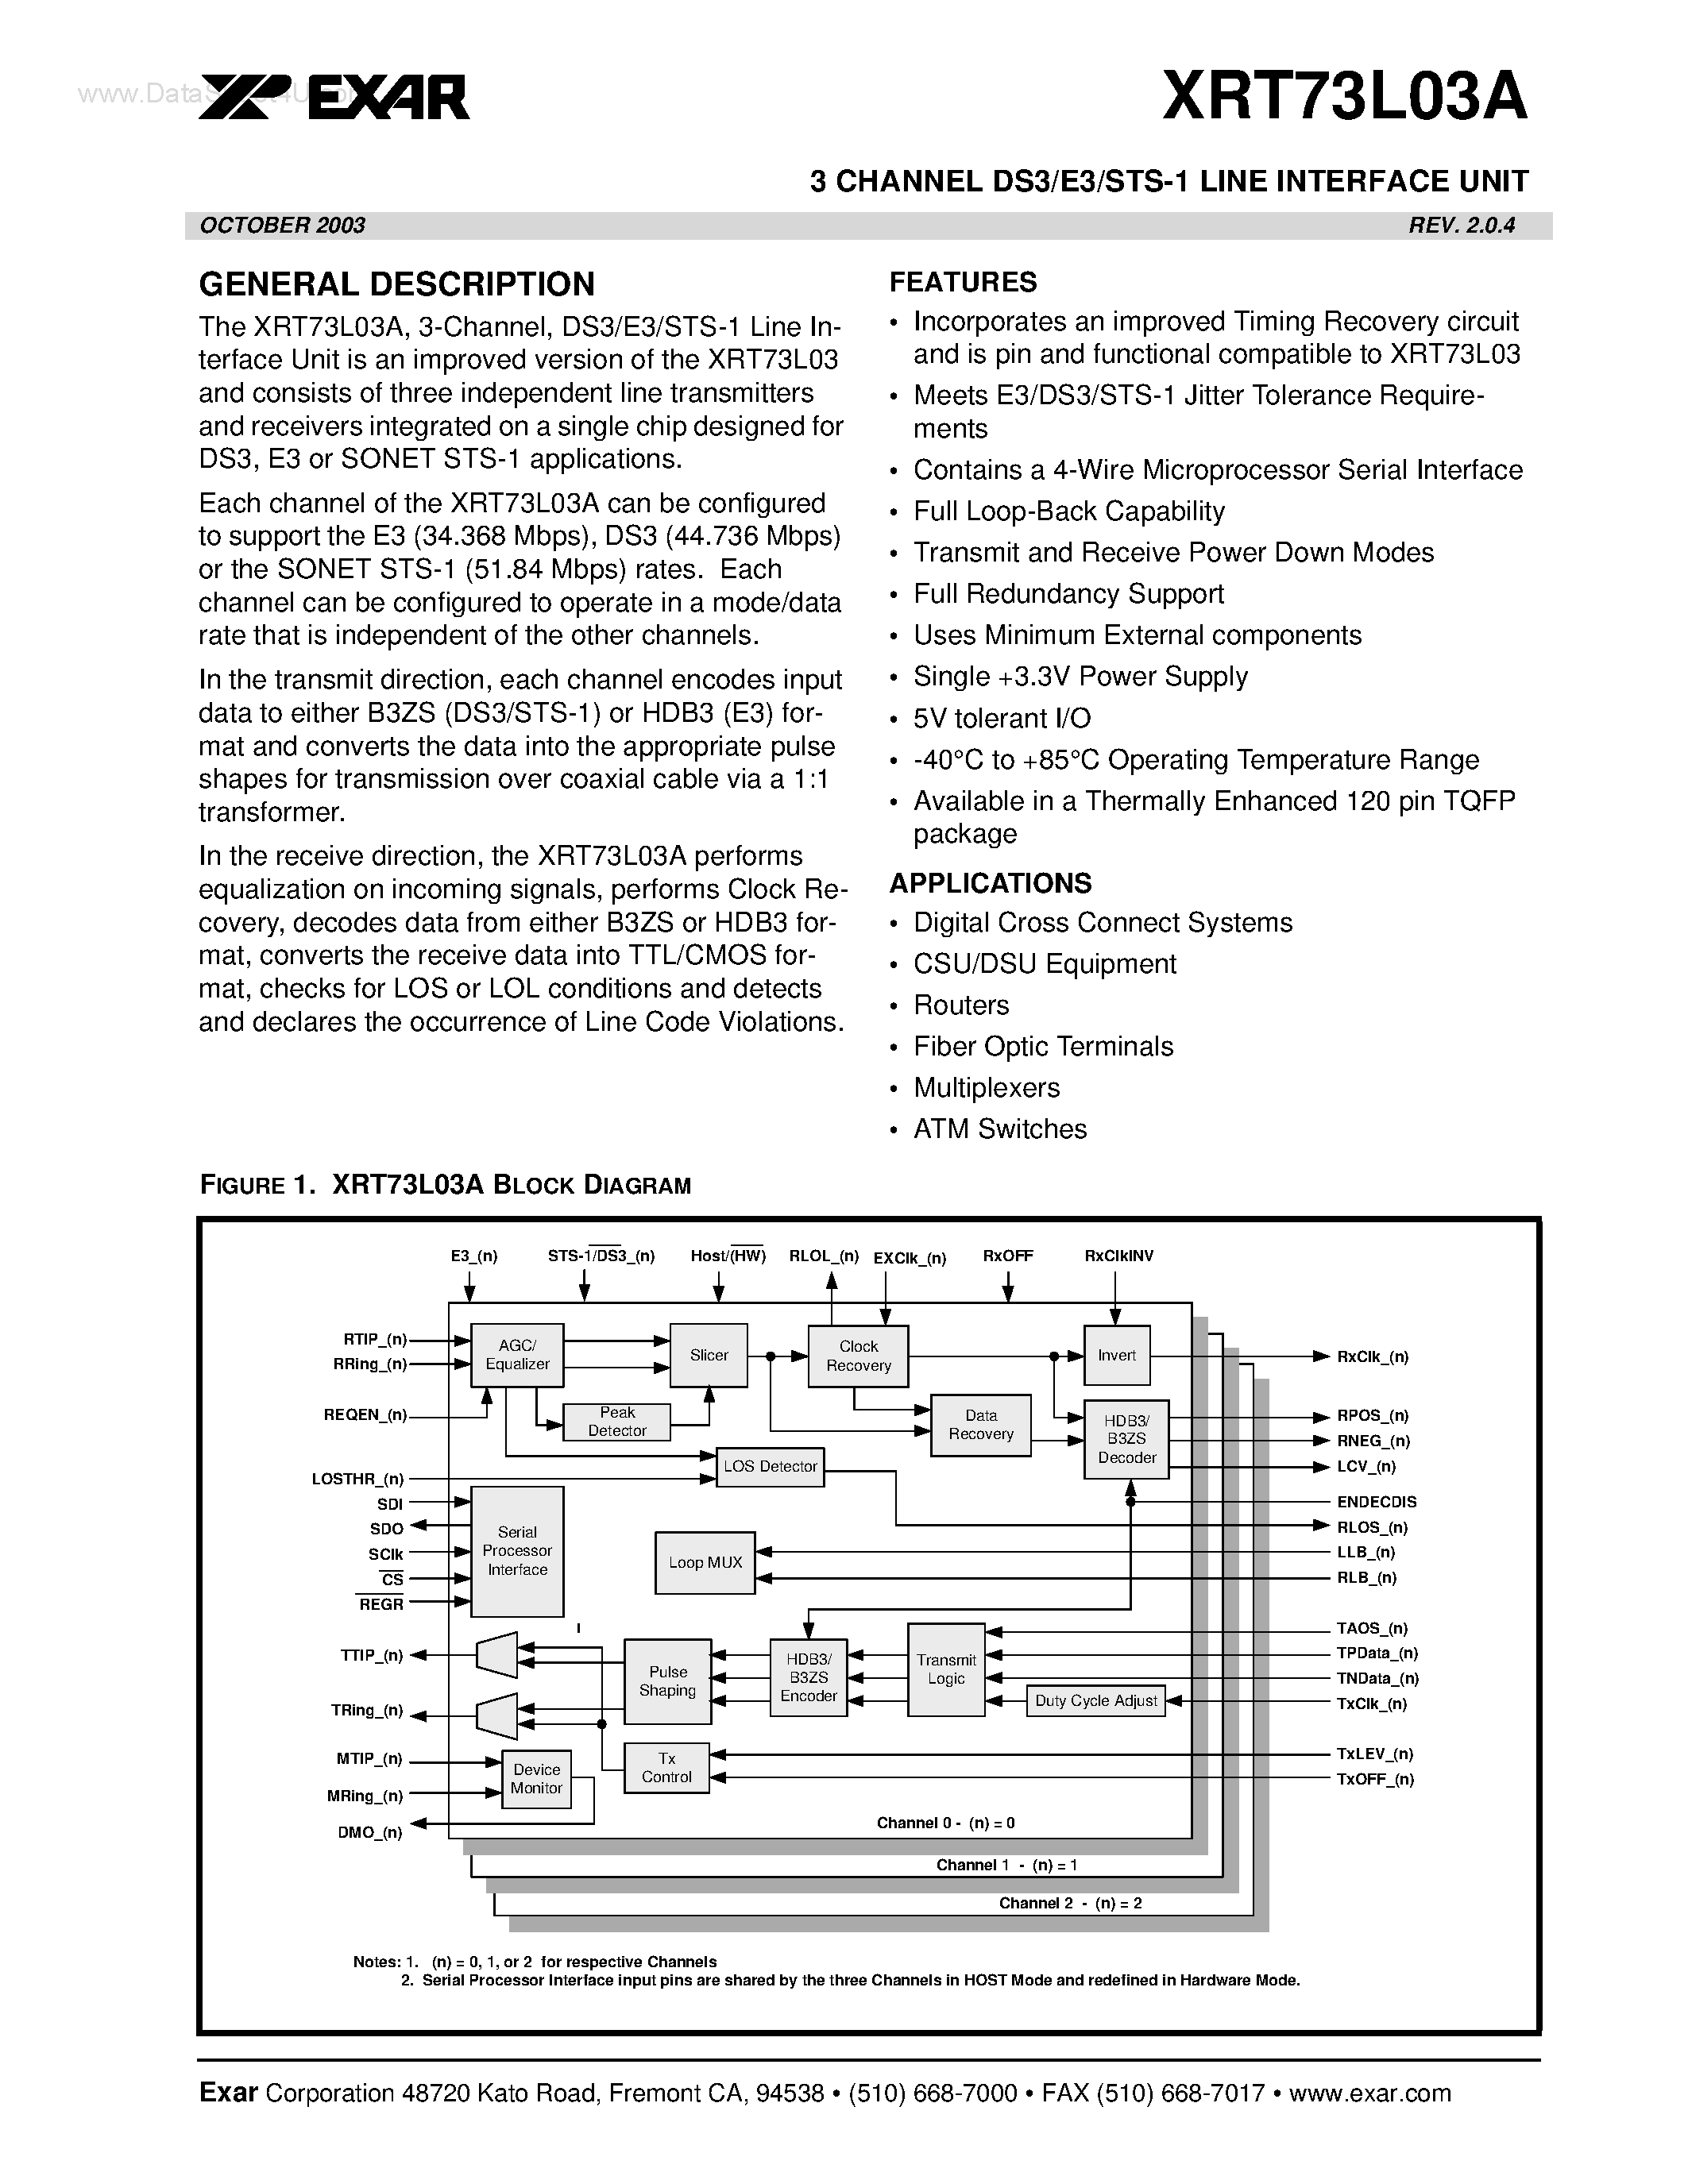 Datasheet XRT73L03A - 3 CHANNEL DS3/E3/STS-1 LINE INTERFACE UNIT page 1